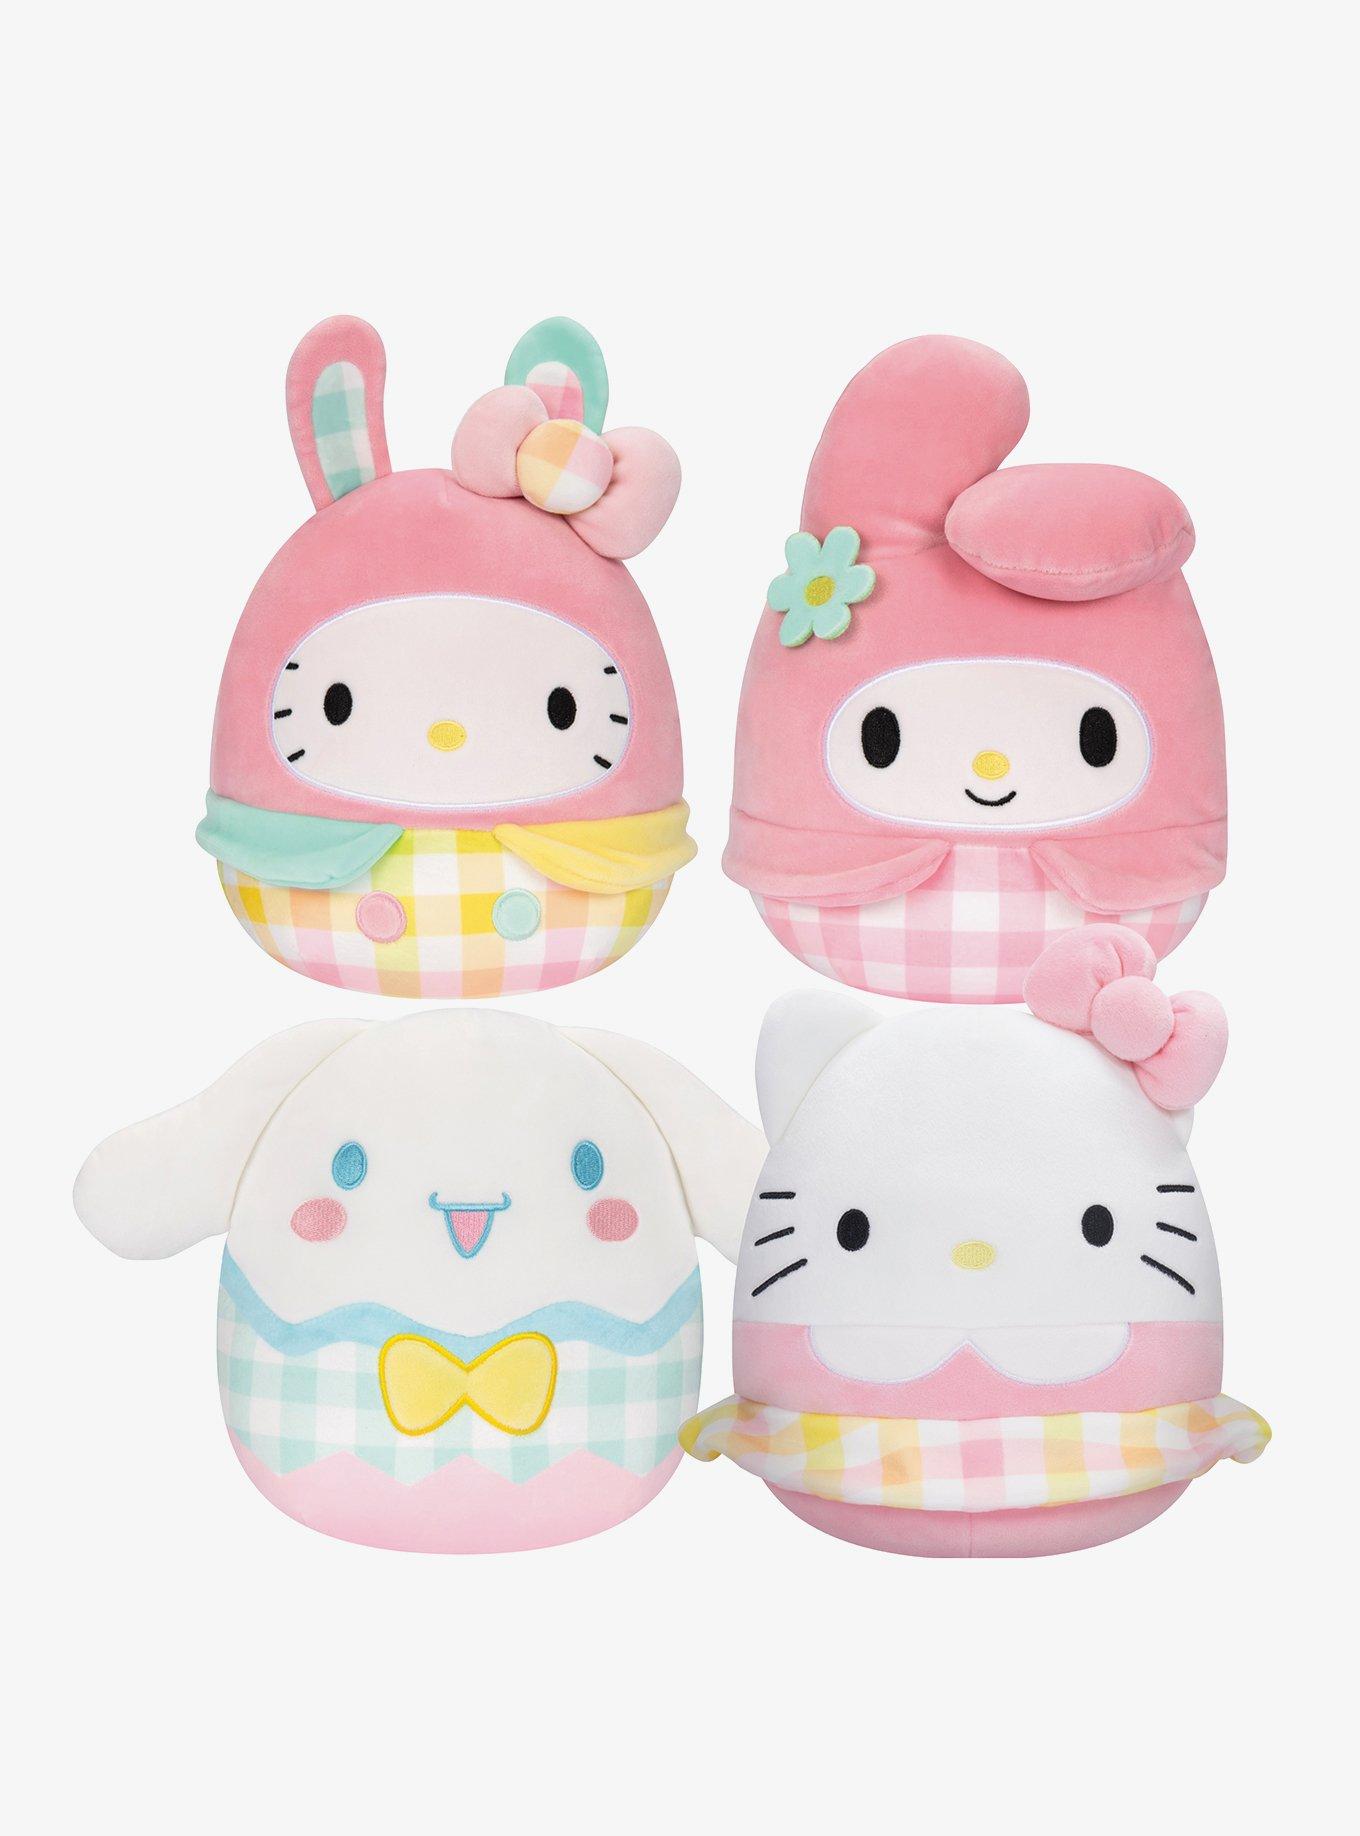 Squishmallows Sanrio Hello Kitty & Friends Spring Blind Bag 8 Inch Plush